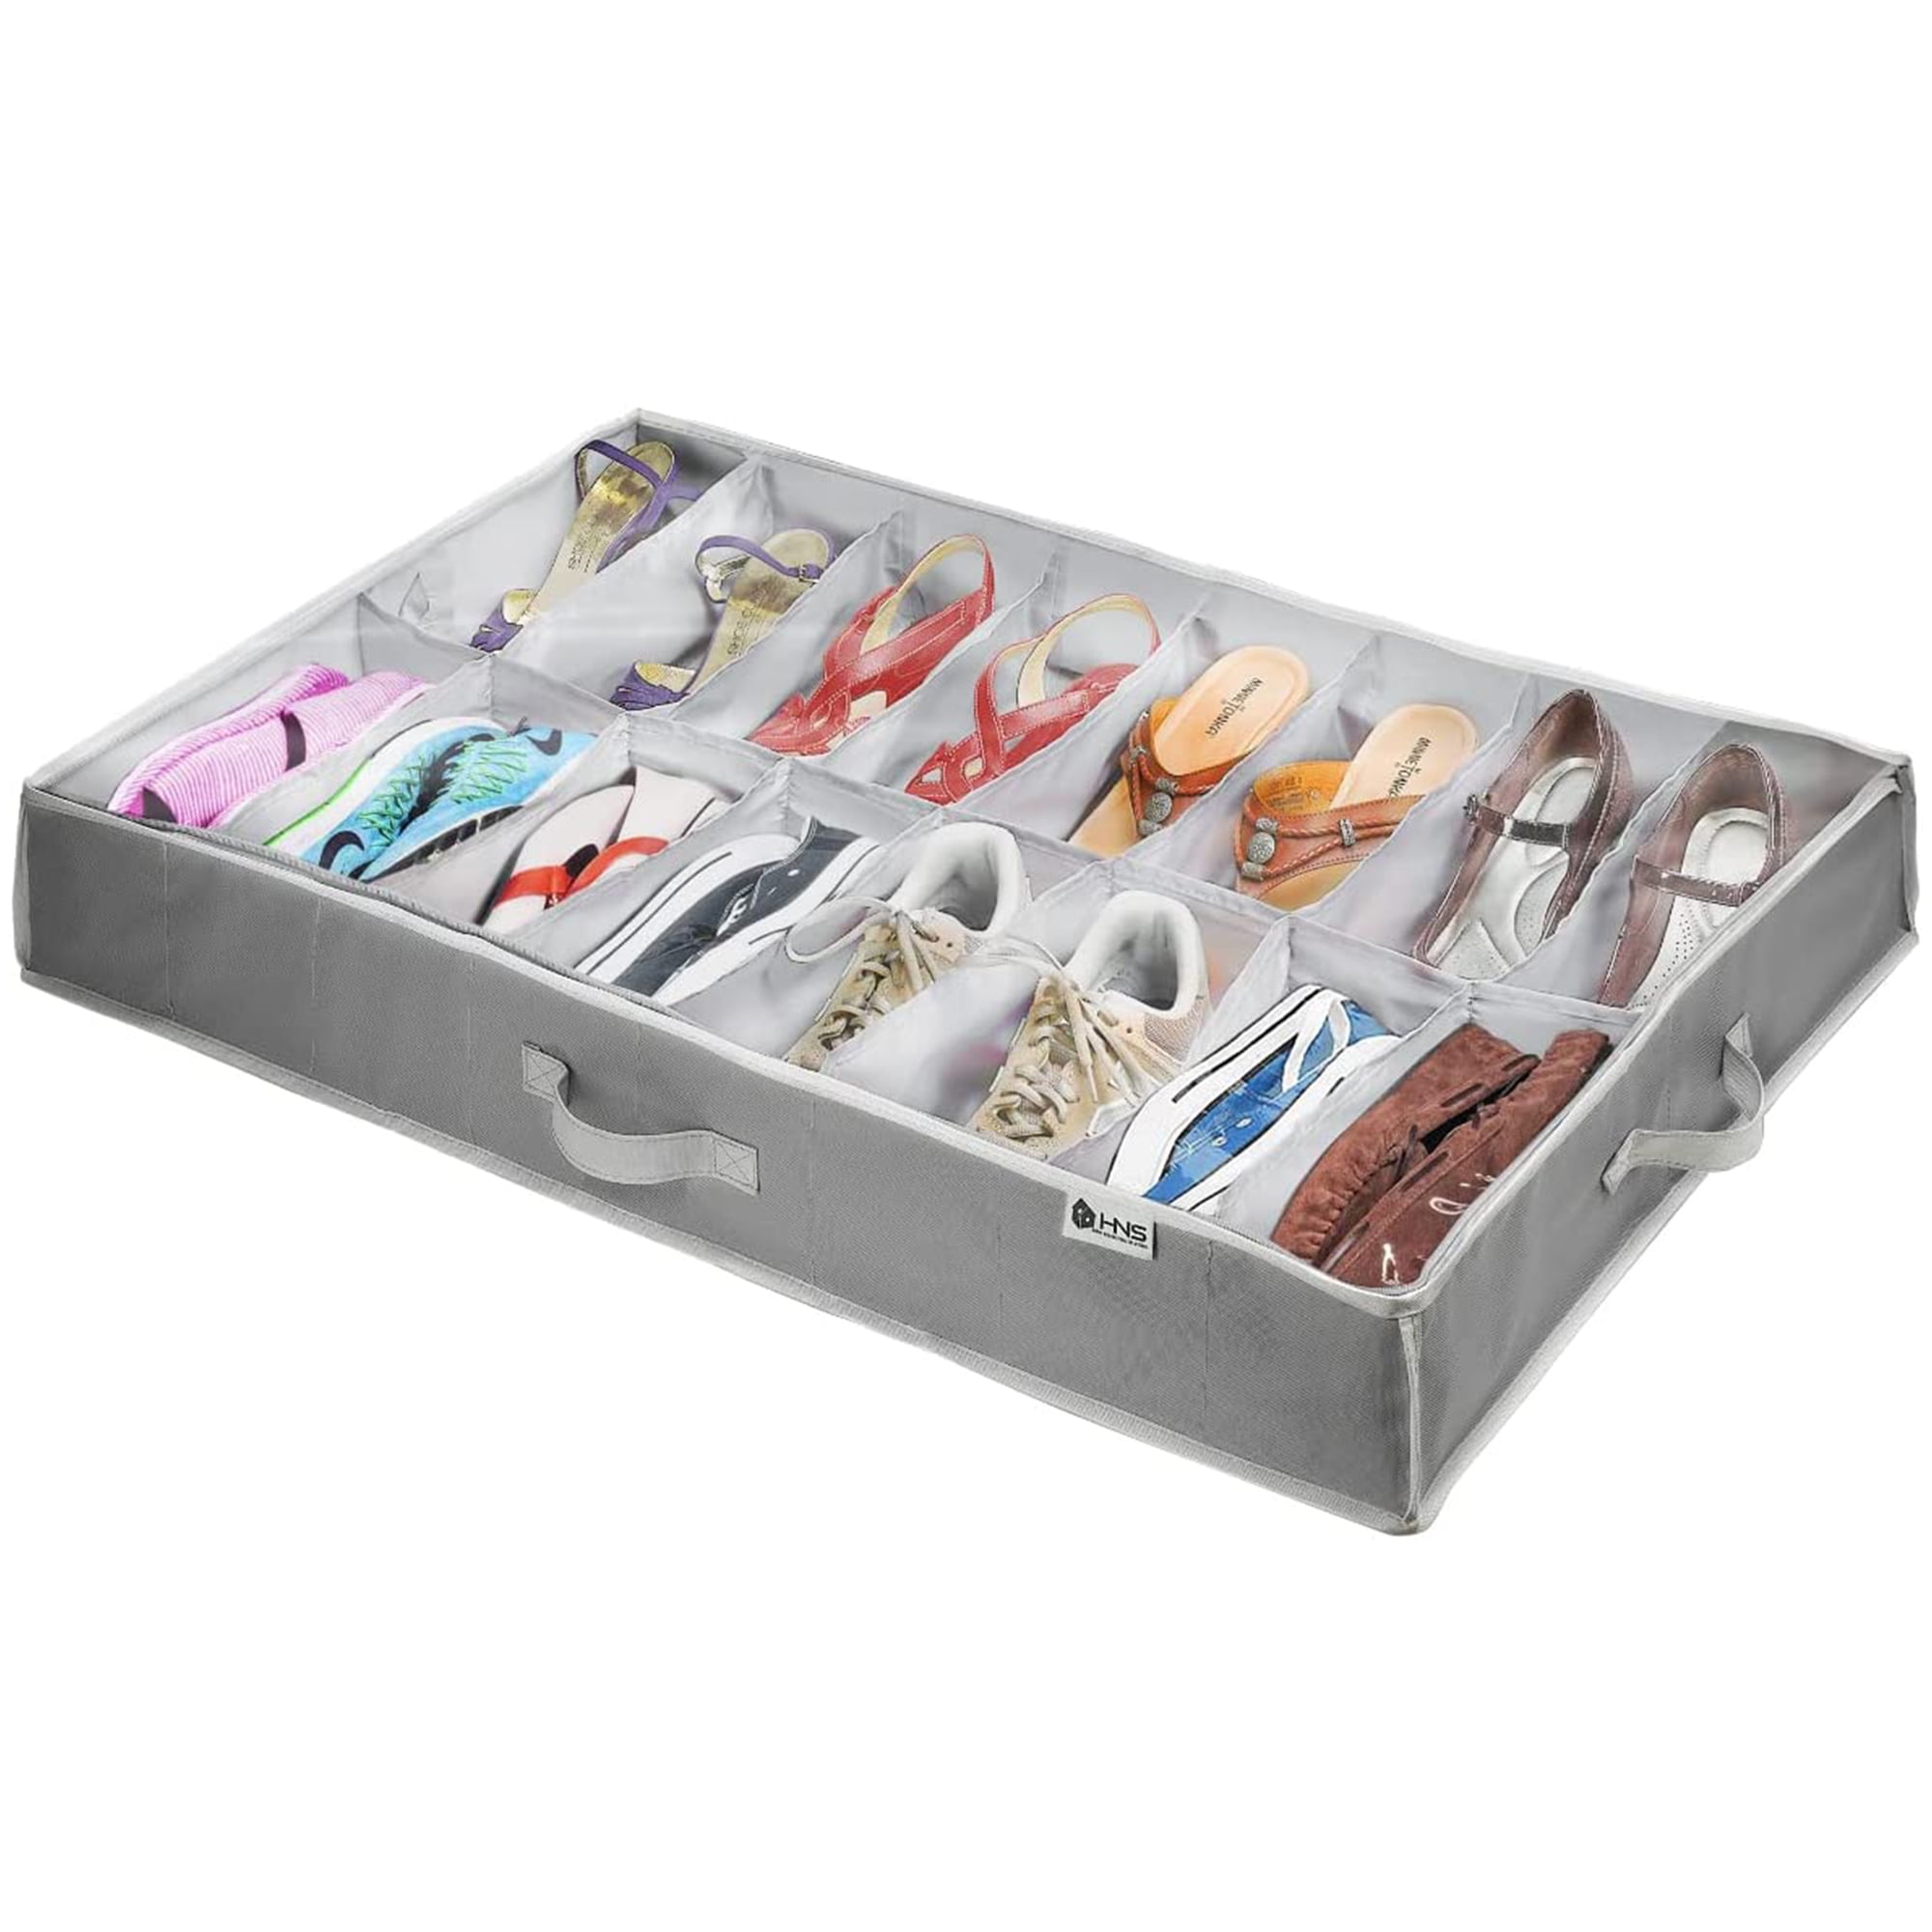 1pc Clear Mesh Shoes Storage Box Underbed Waterproof Storage Bins